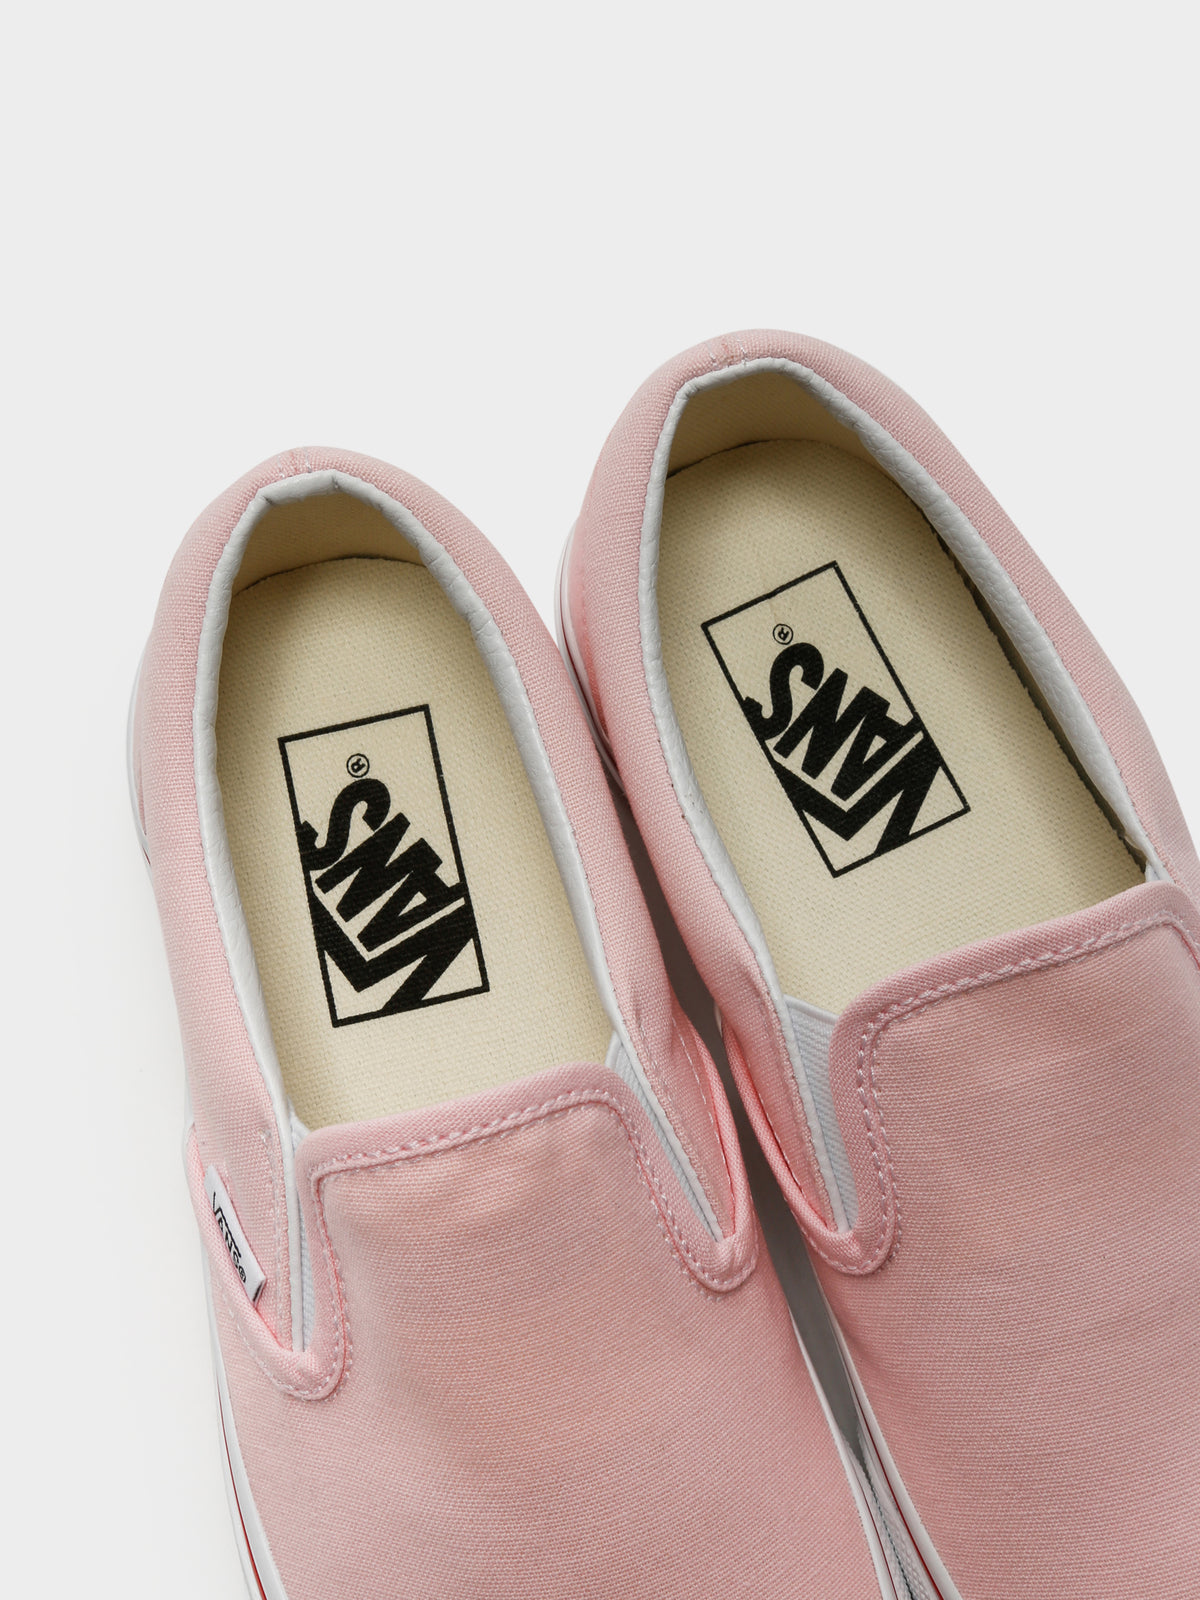 Unisex Sidewall Print Slip On Sneakers in Strawberry Pink